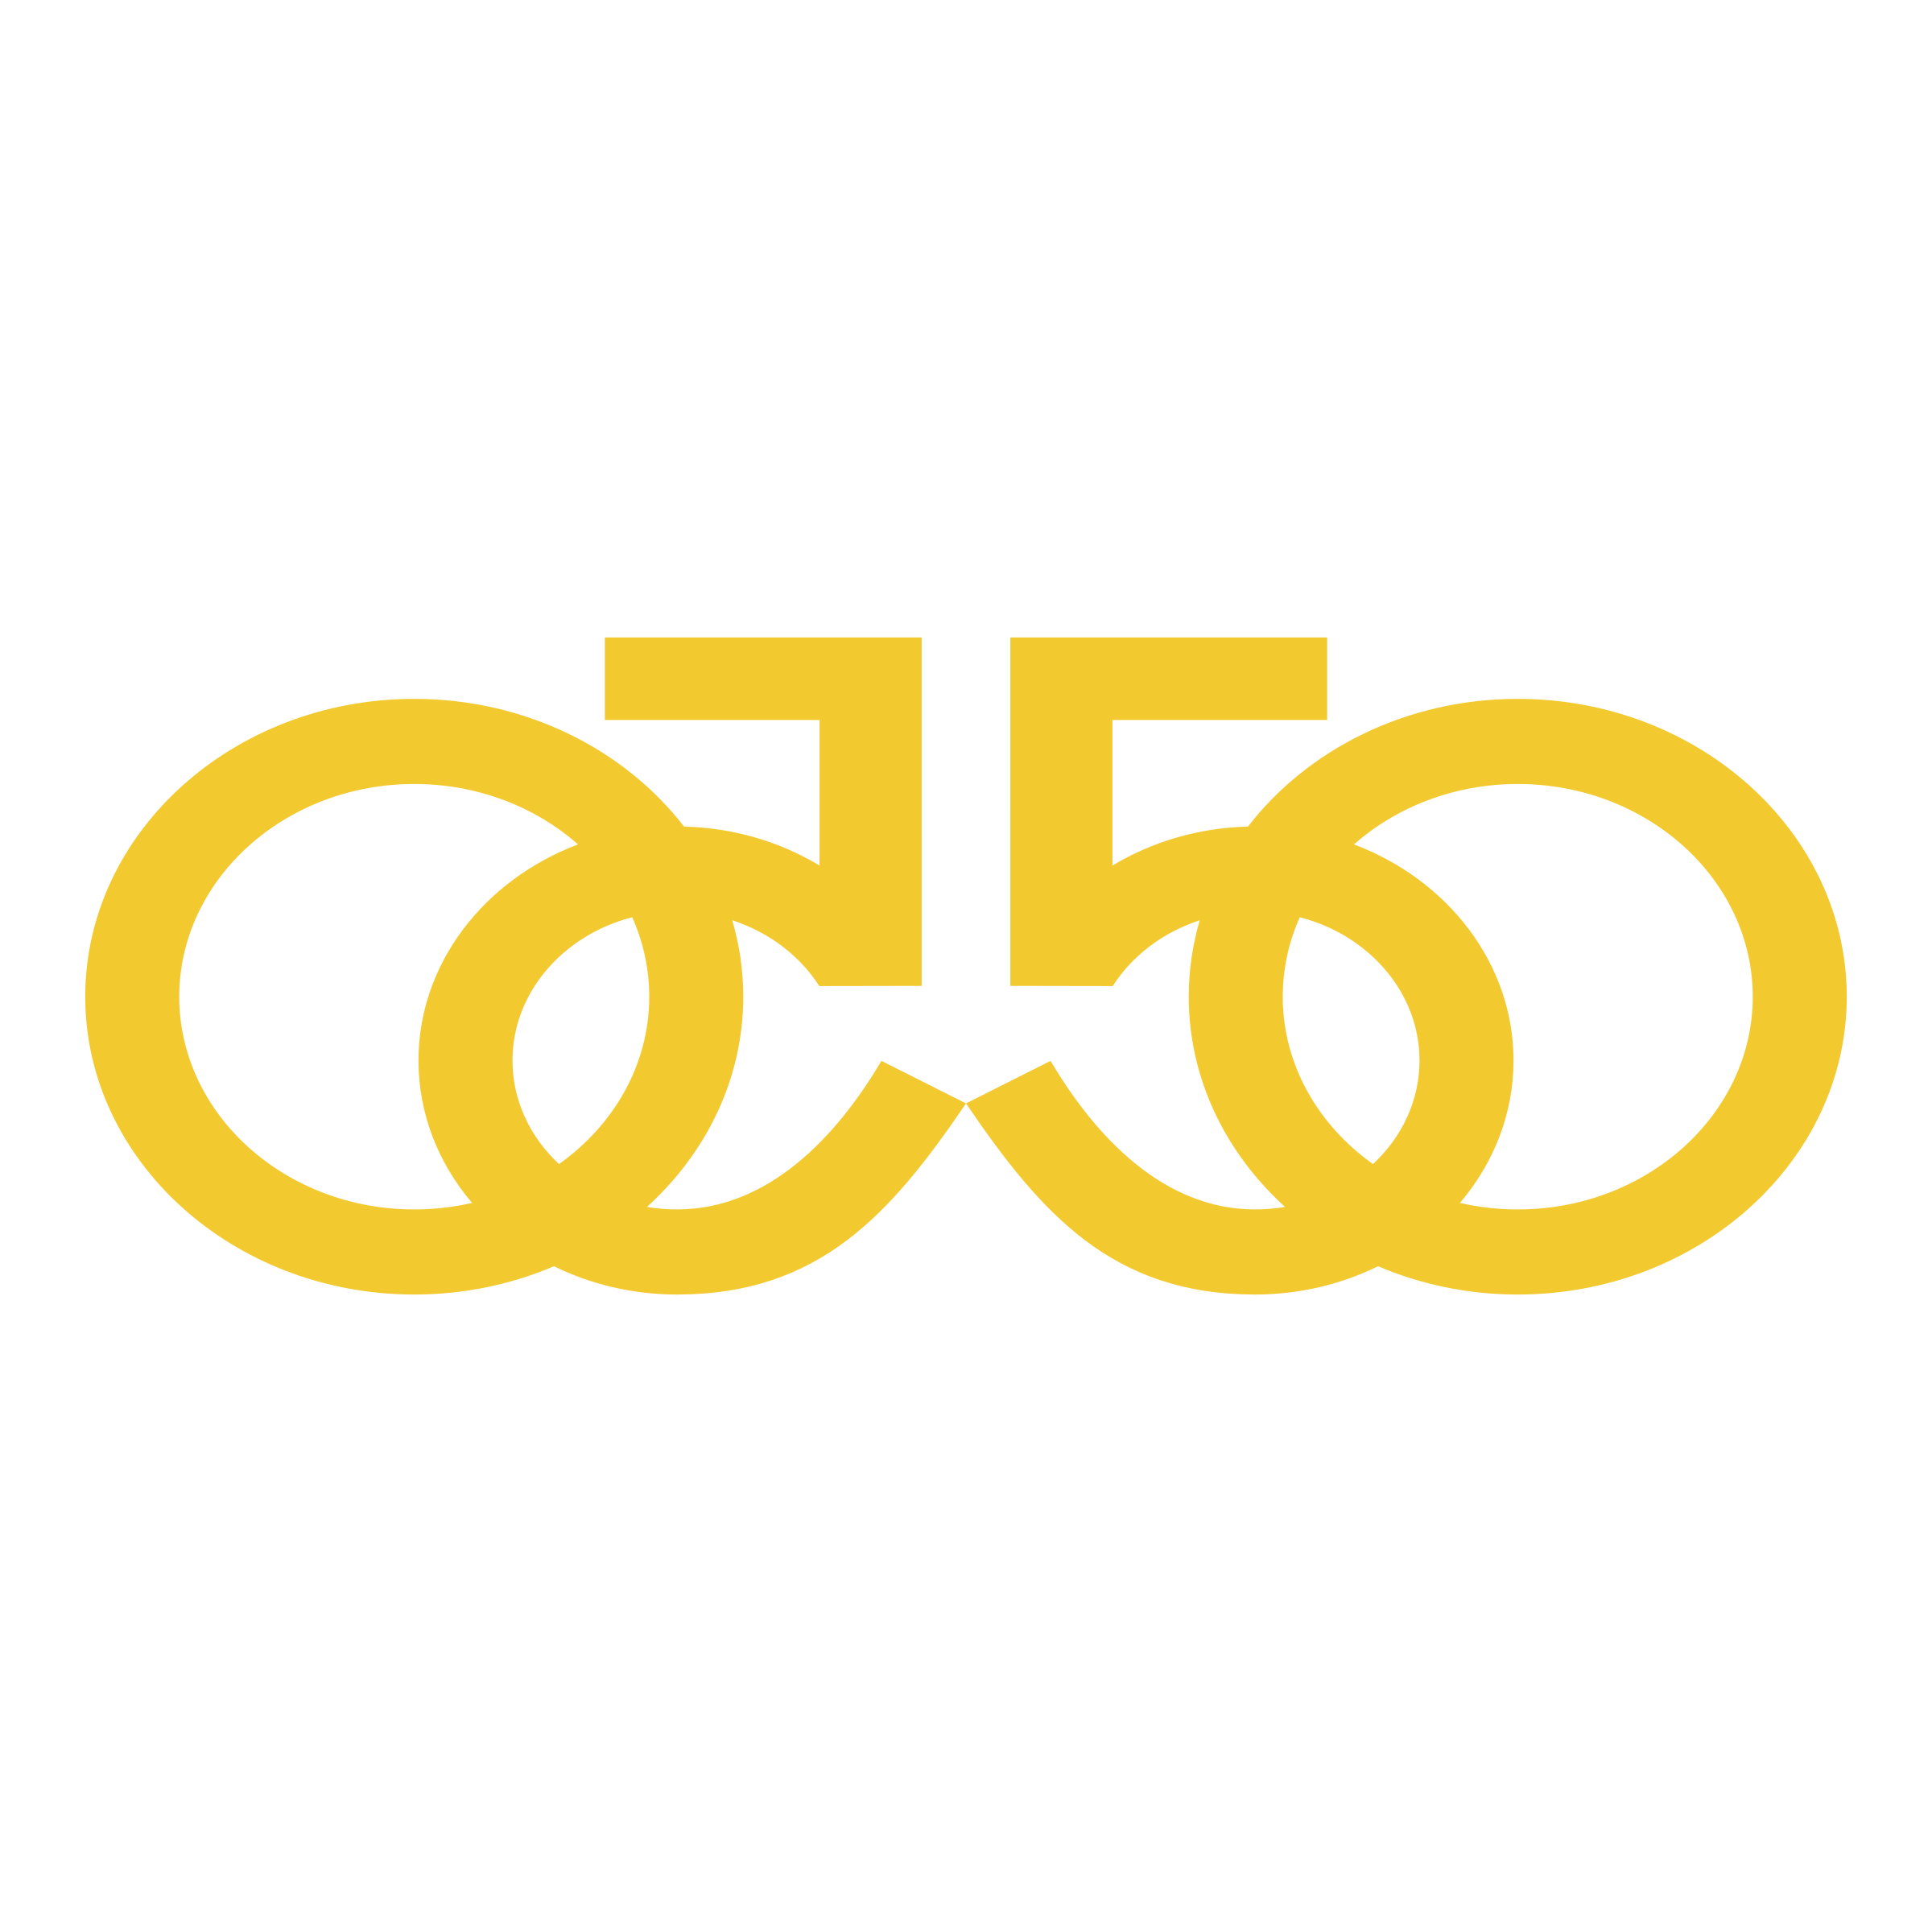 50/50 Logo - 50x50 Logo PNG Transparent & SVG Vector - Freebie Supply